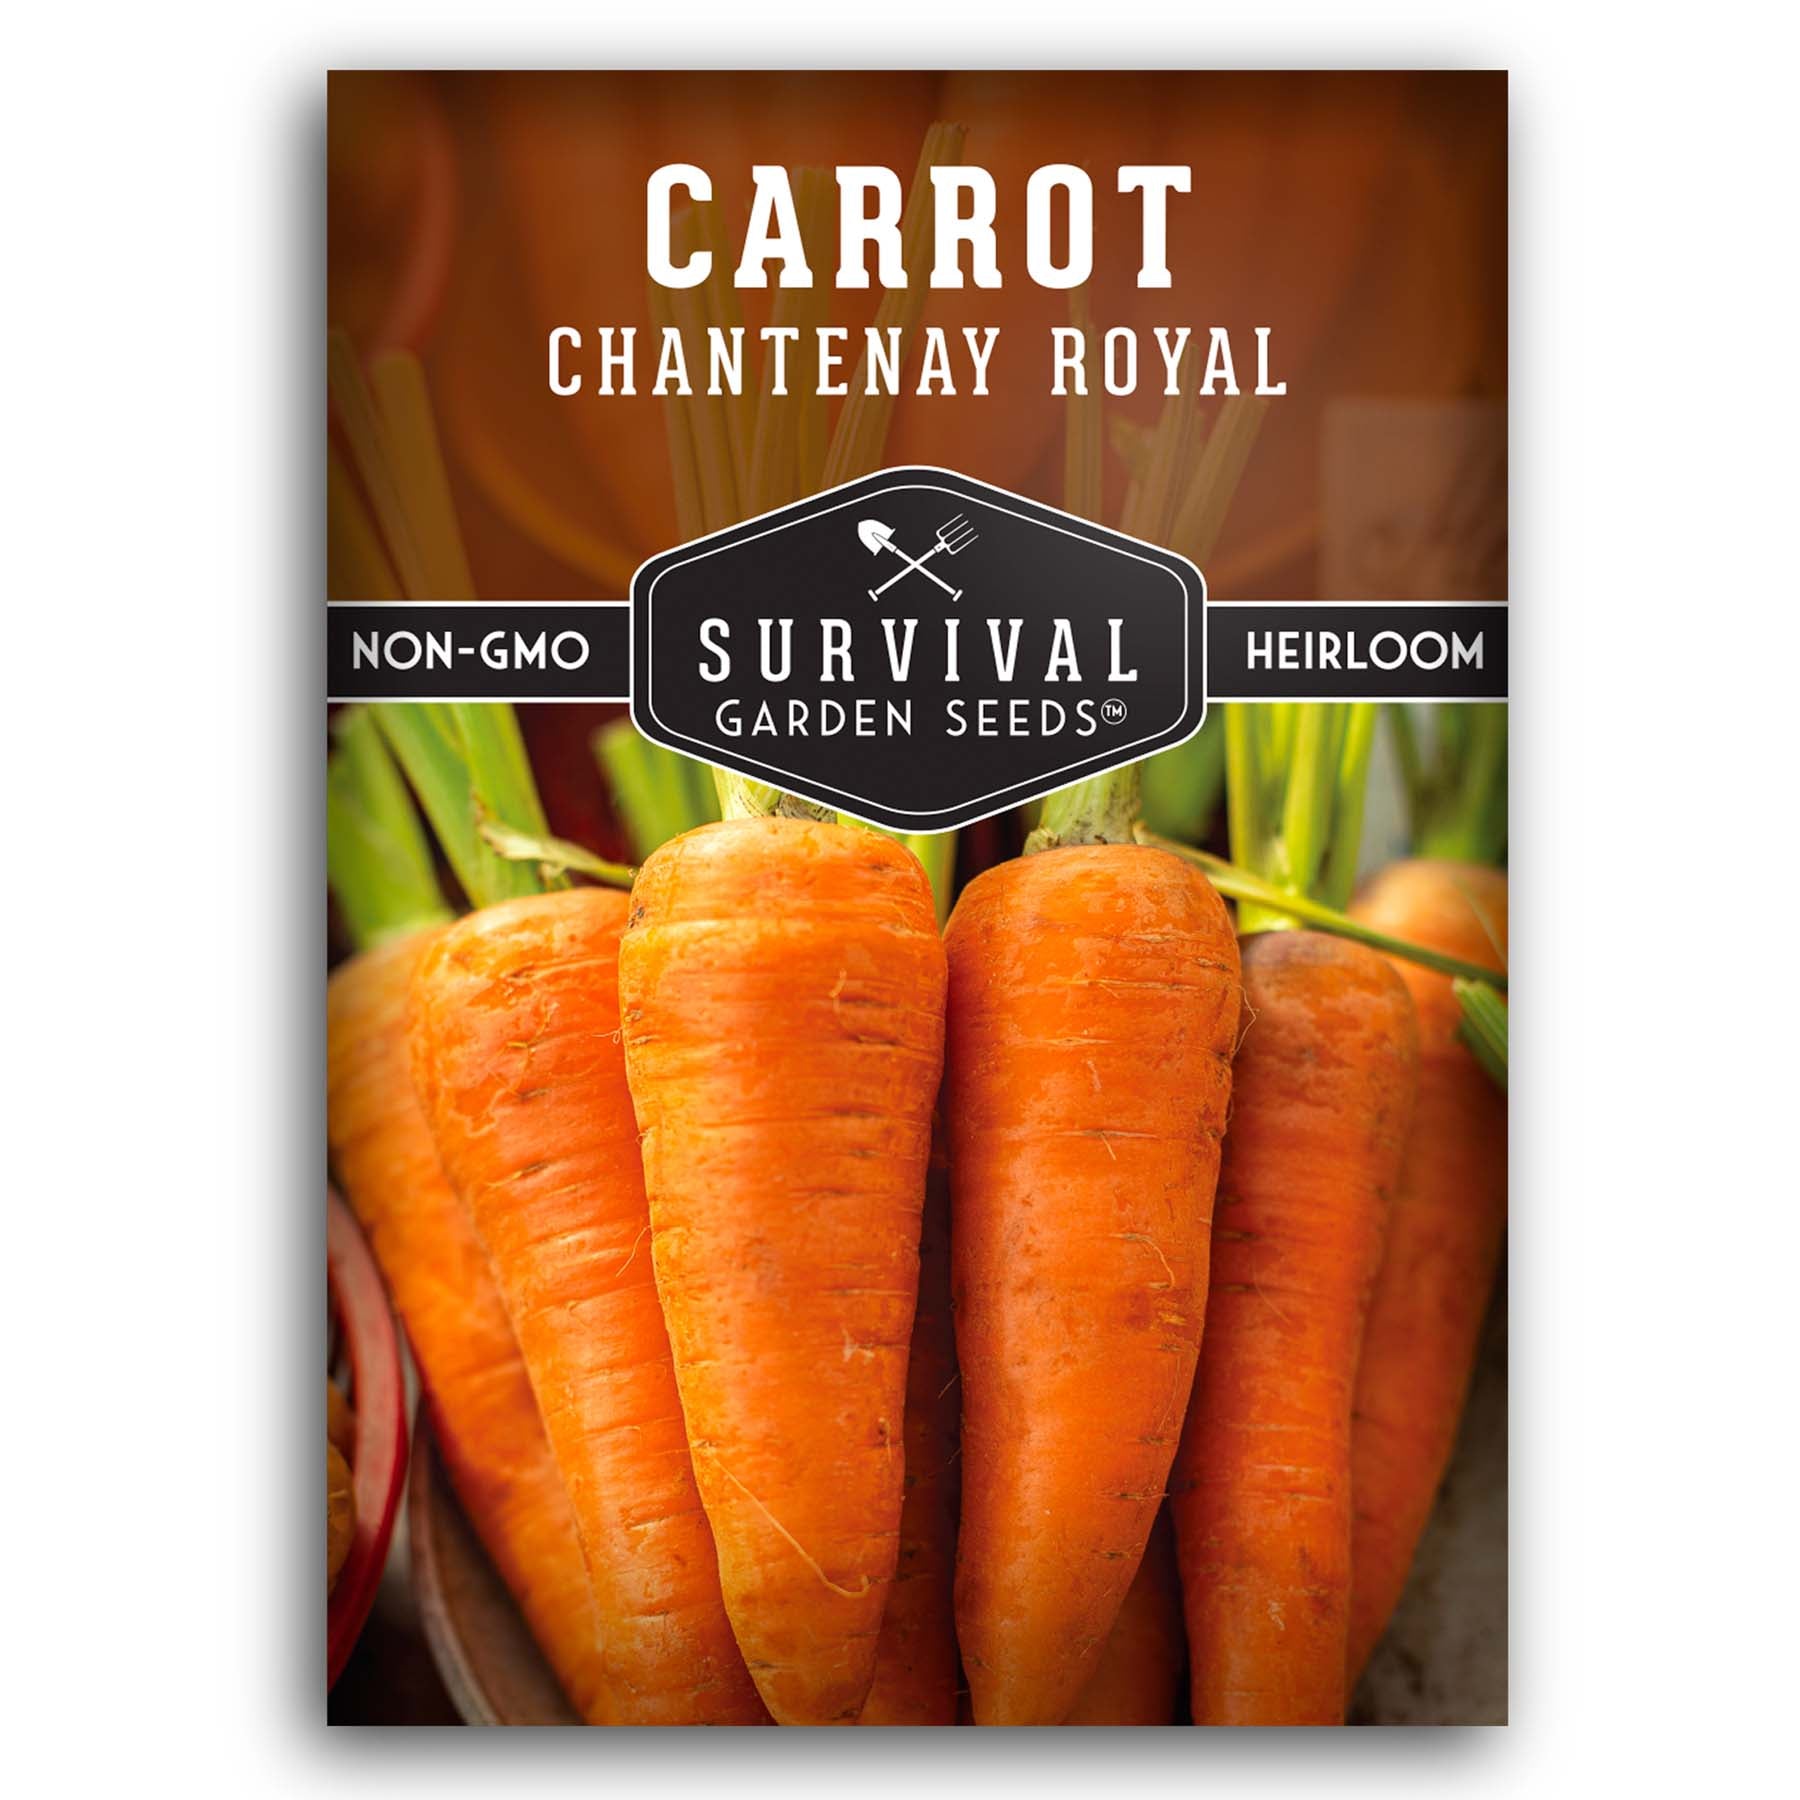 Chantenay Royal Carrot Seeds for planting